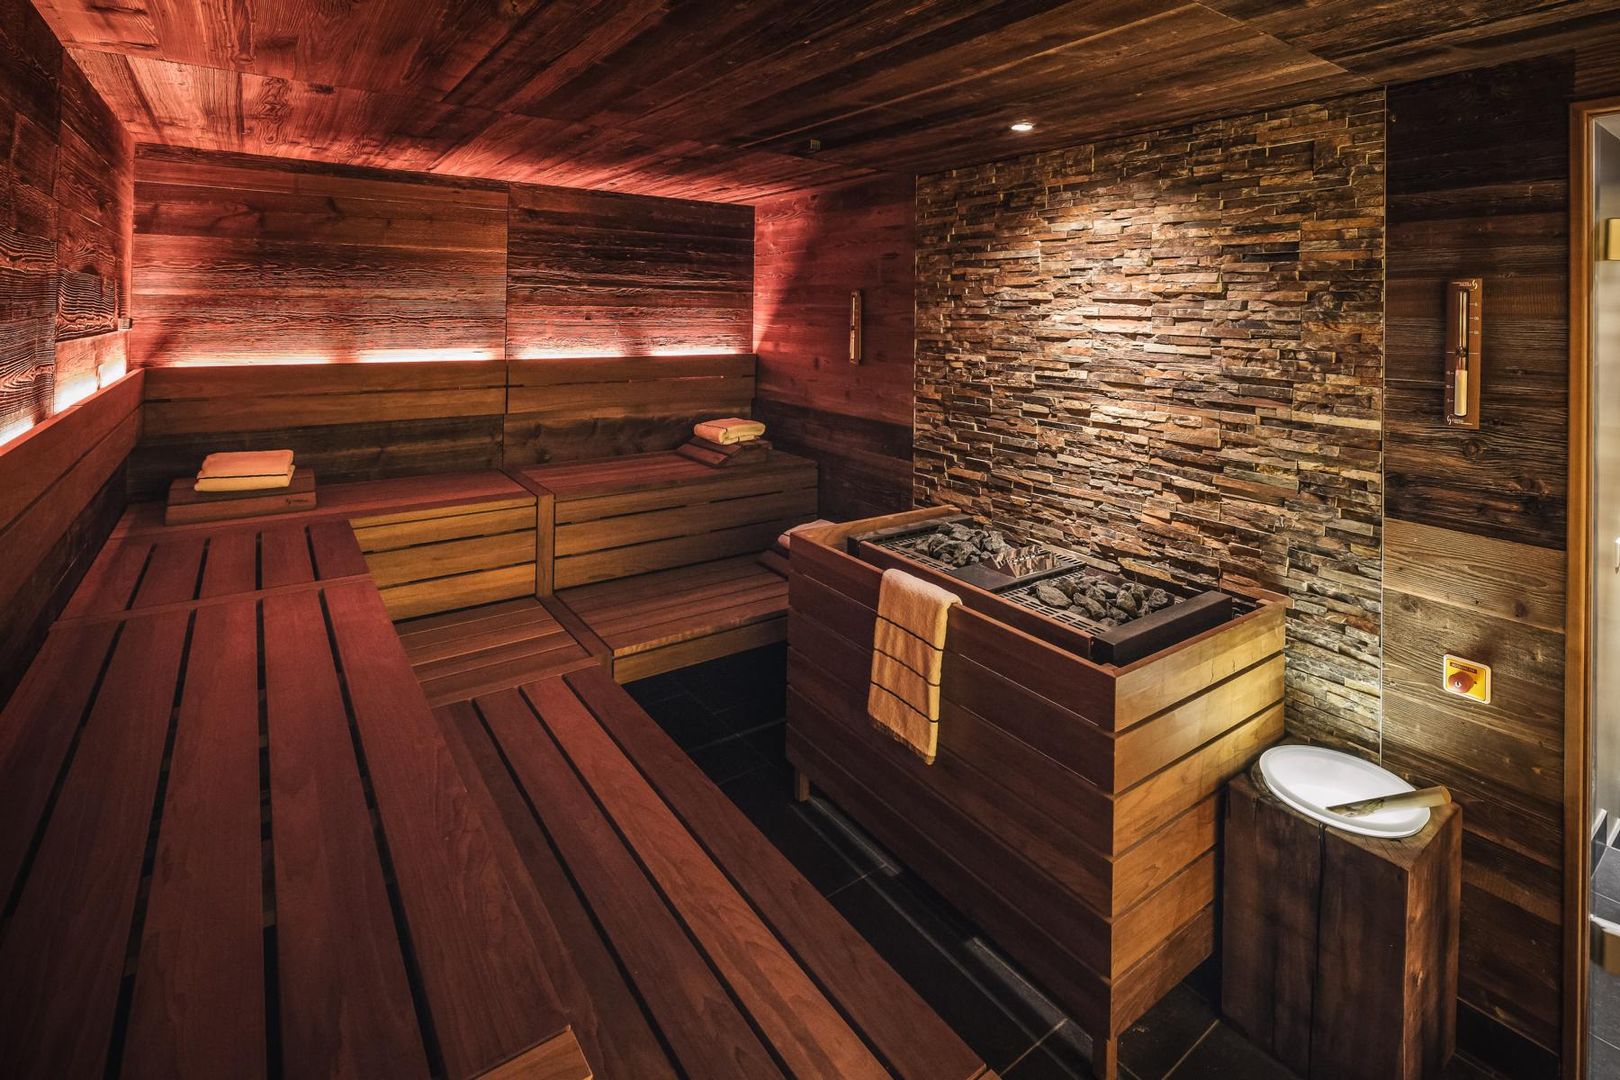 Referenz Nr. 3, corso sauna manufaktur gmbh corso sauna manufaktur gmbh مساحات تجارية حجر فنادق